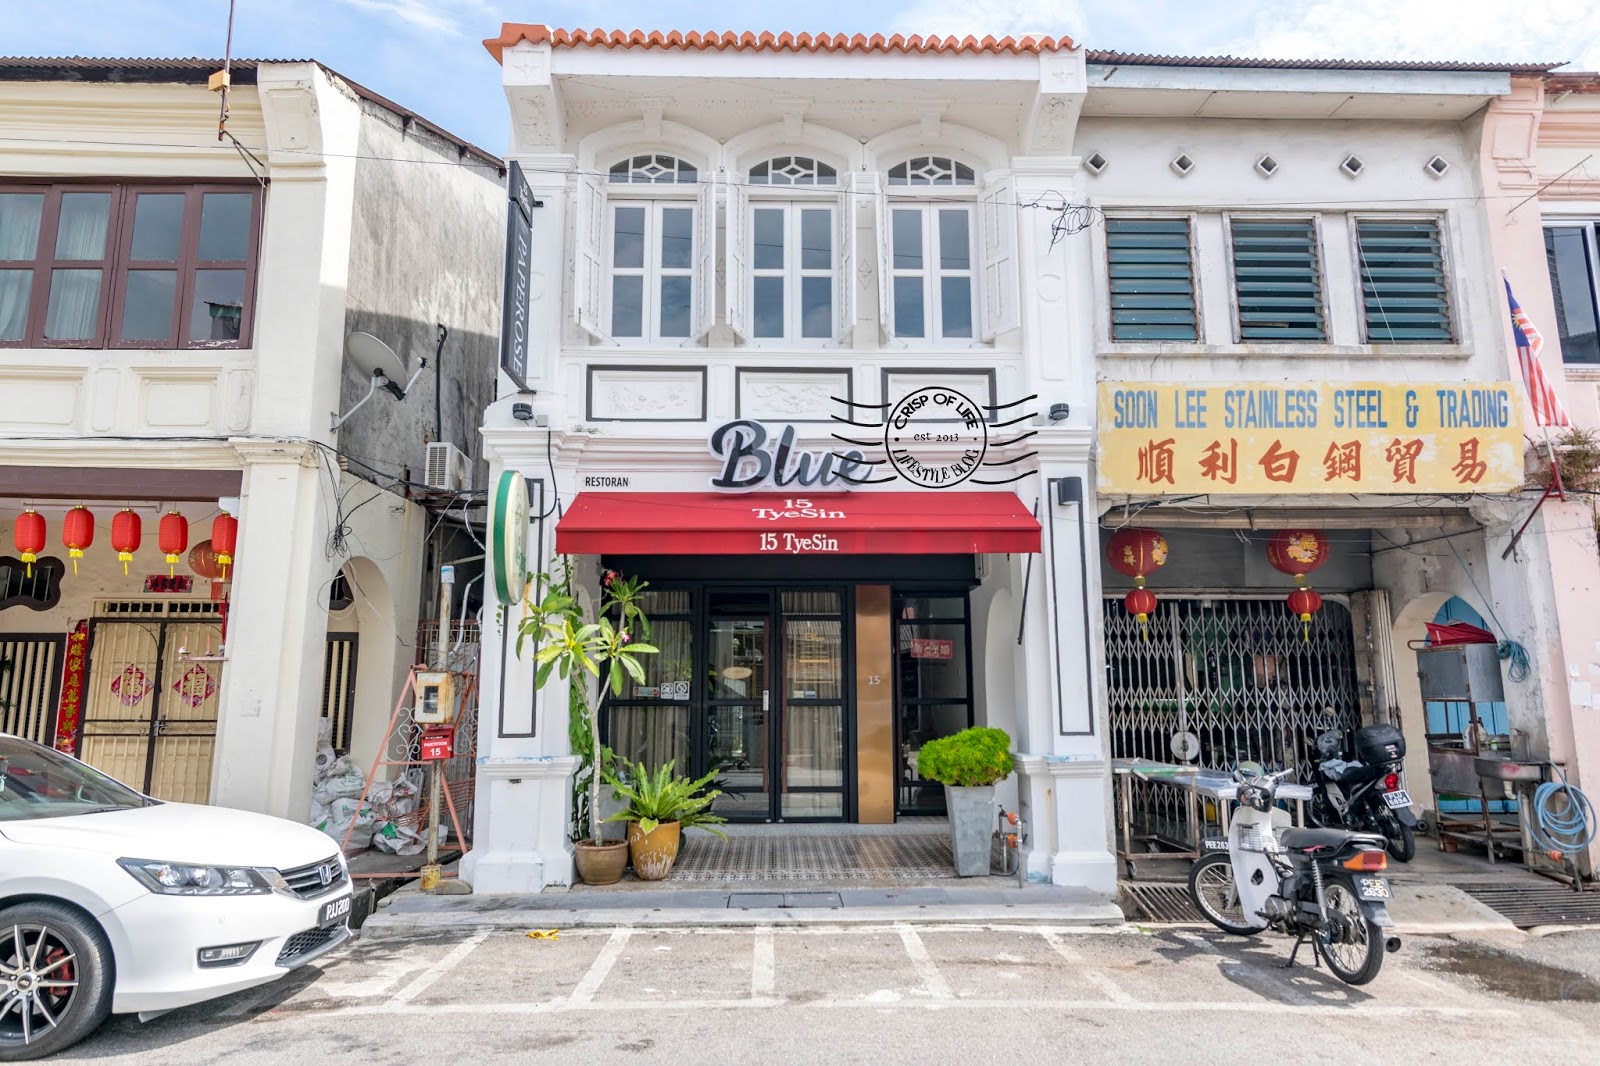 The Blue Vegan Restaurant - A Western Asian Fusion Vegan Restaurant @ Lebuh Tye Sin, Georgetown, Penang